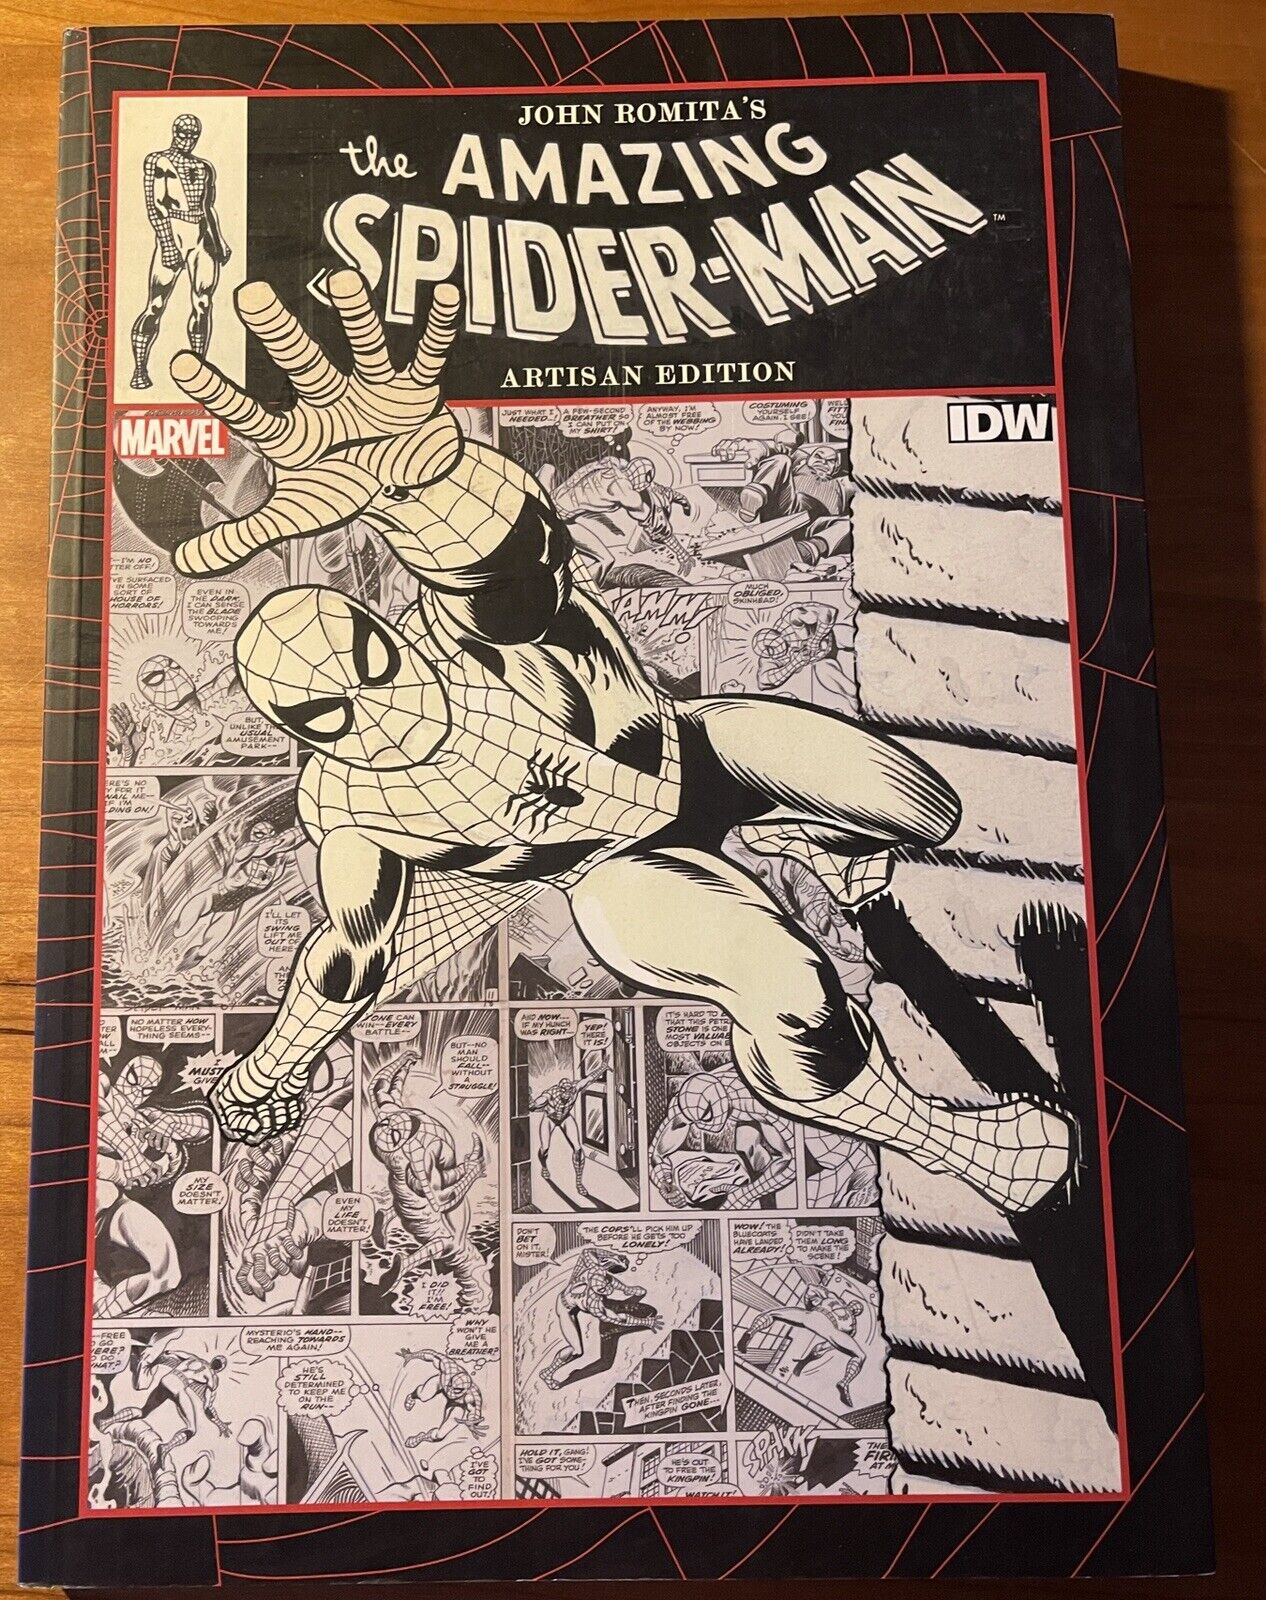 IDW John Romita's The Amazing Spider-Man Artisan Edition softcover